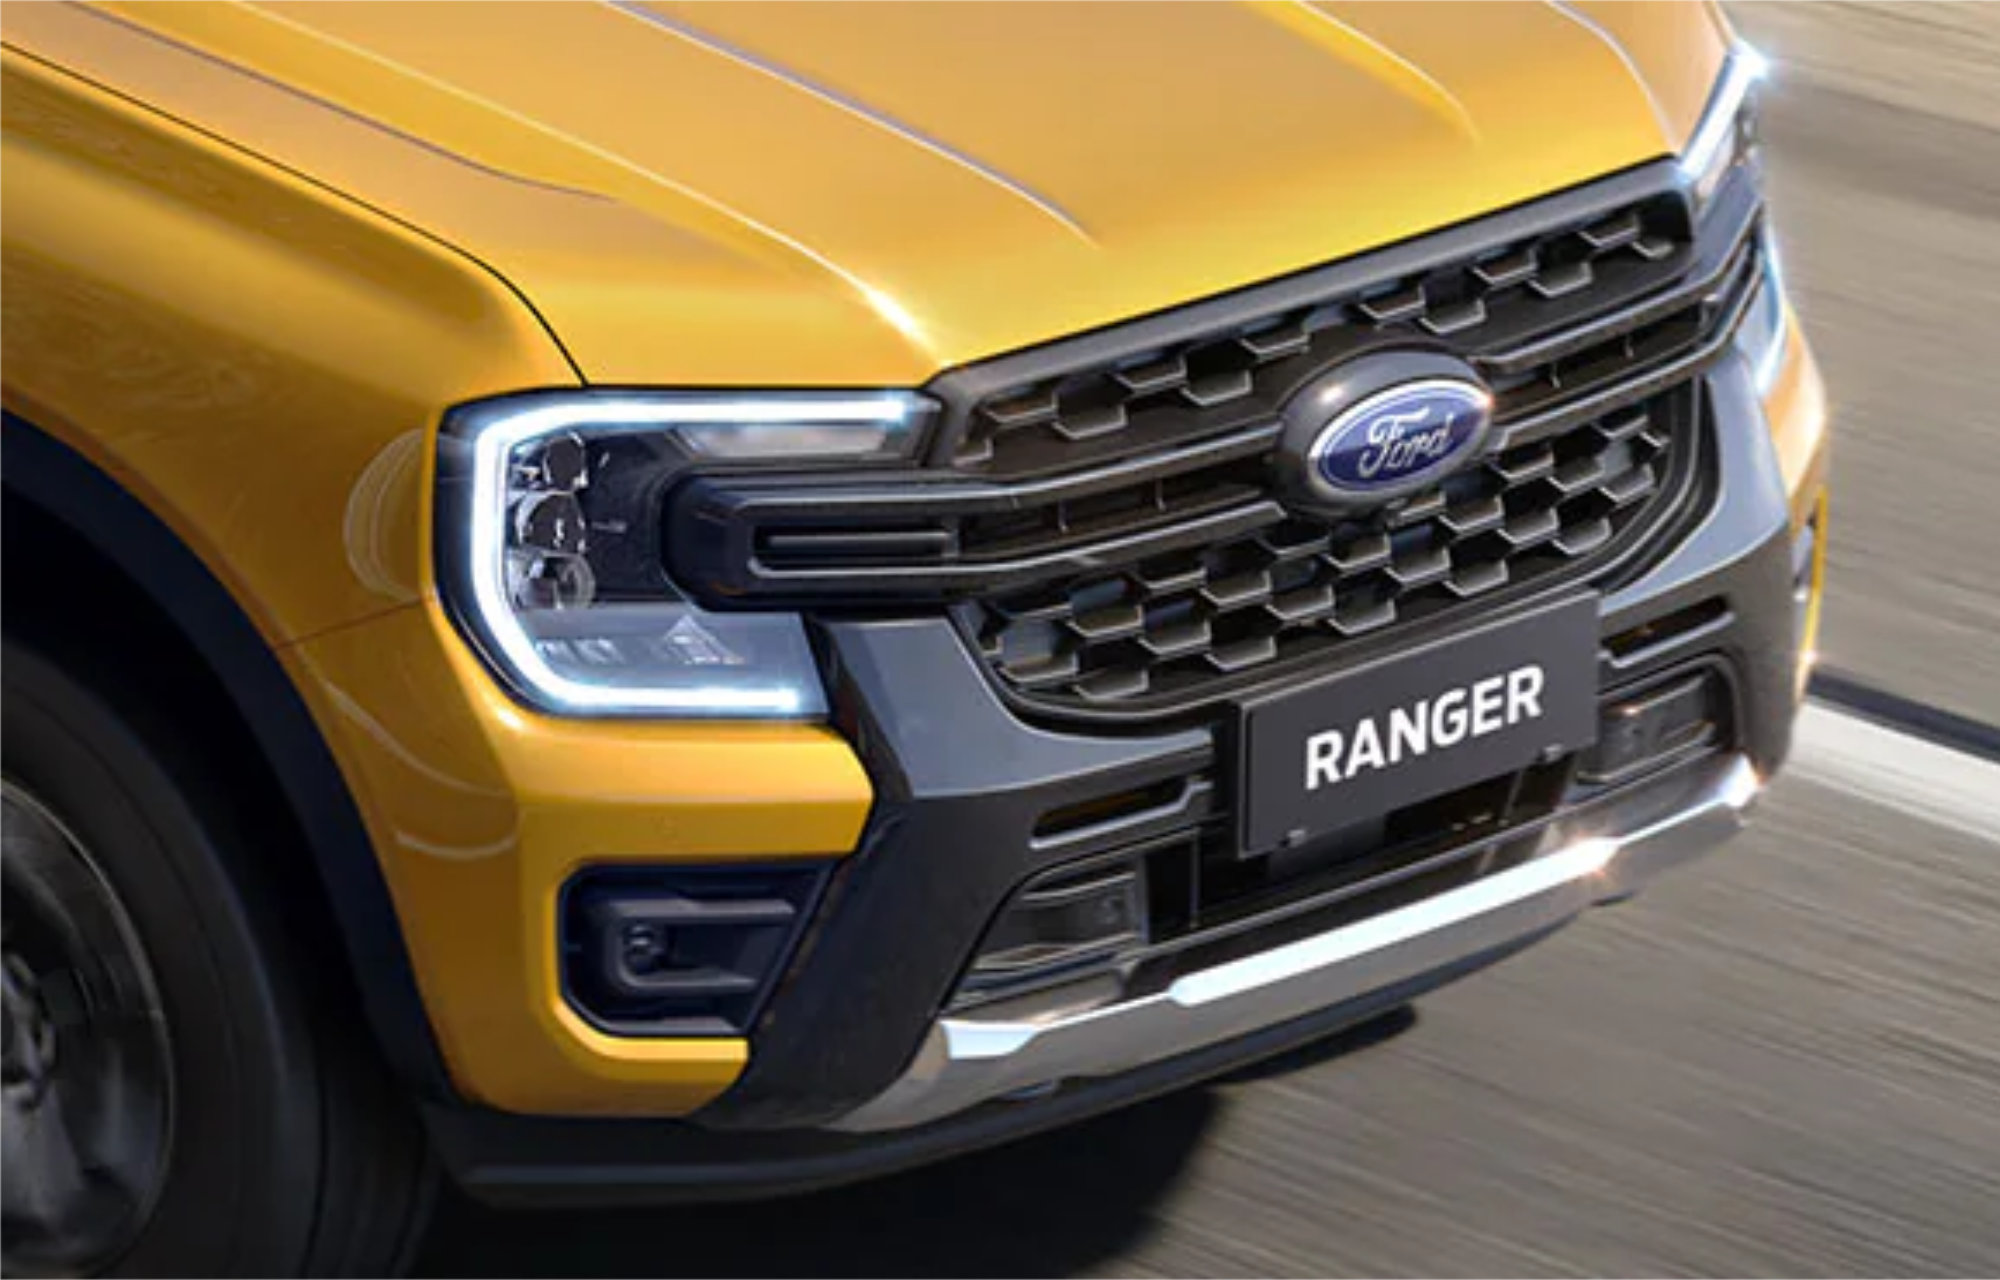 Ford Ranger Wildtrak - New Fords from Avon City Ford of Sockburn,  Christchurch